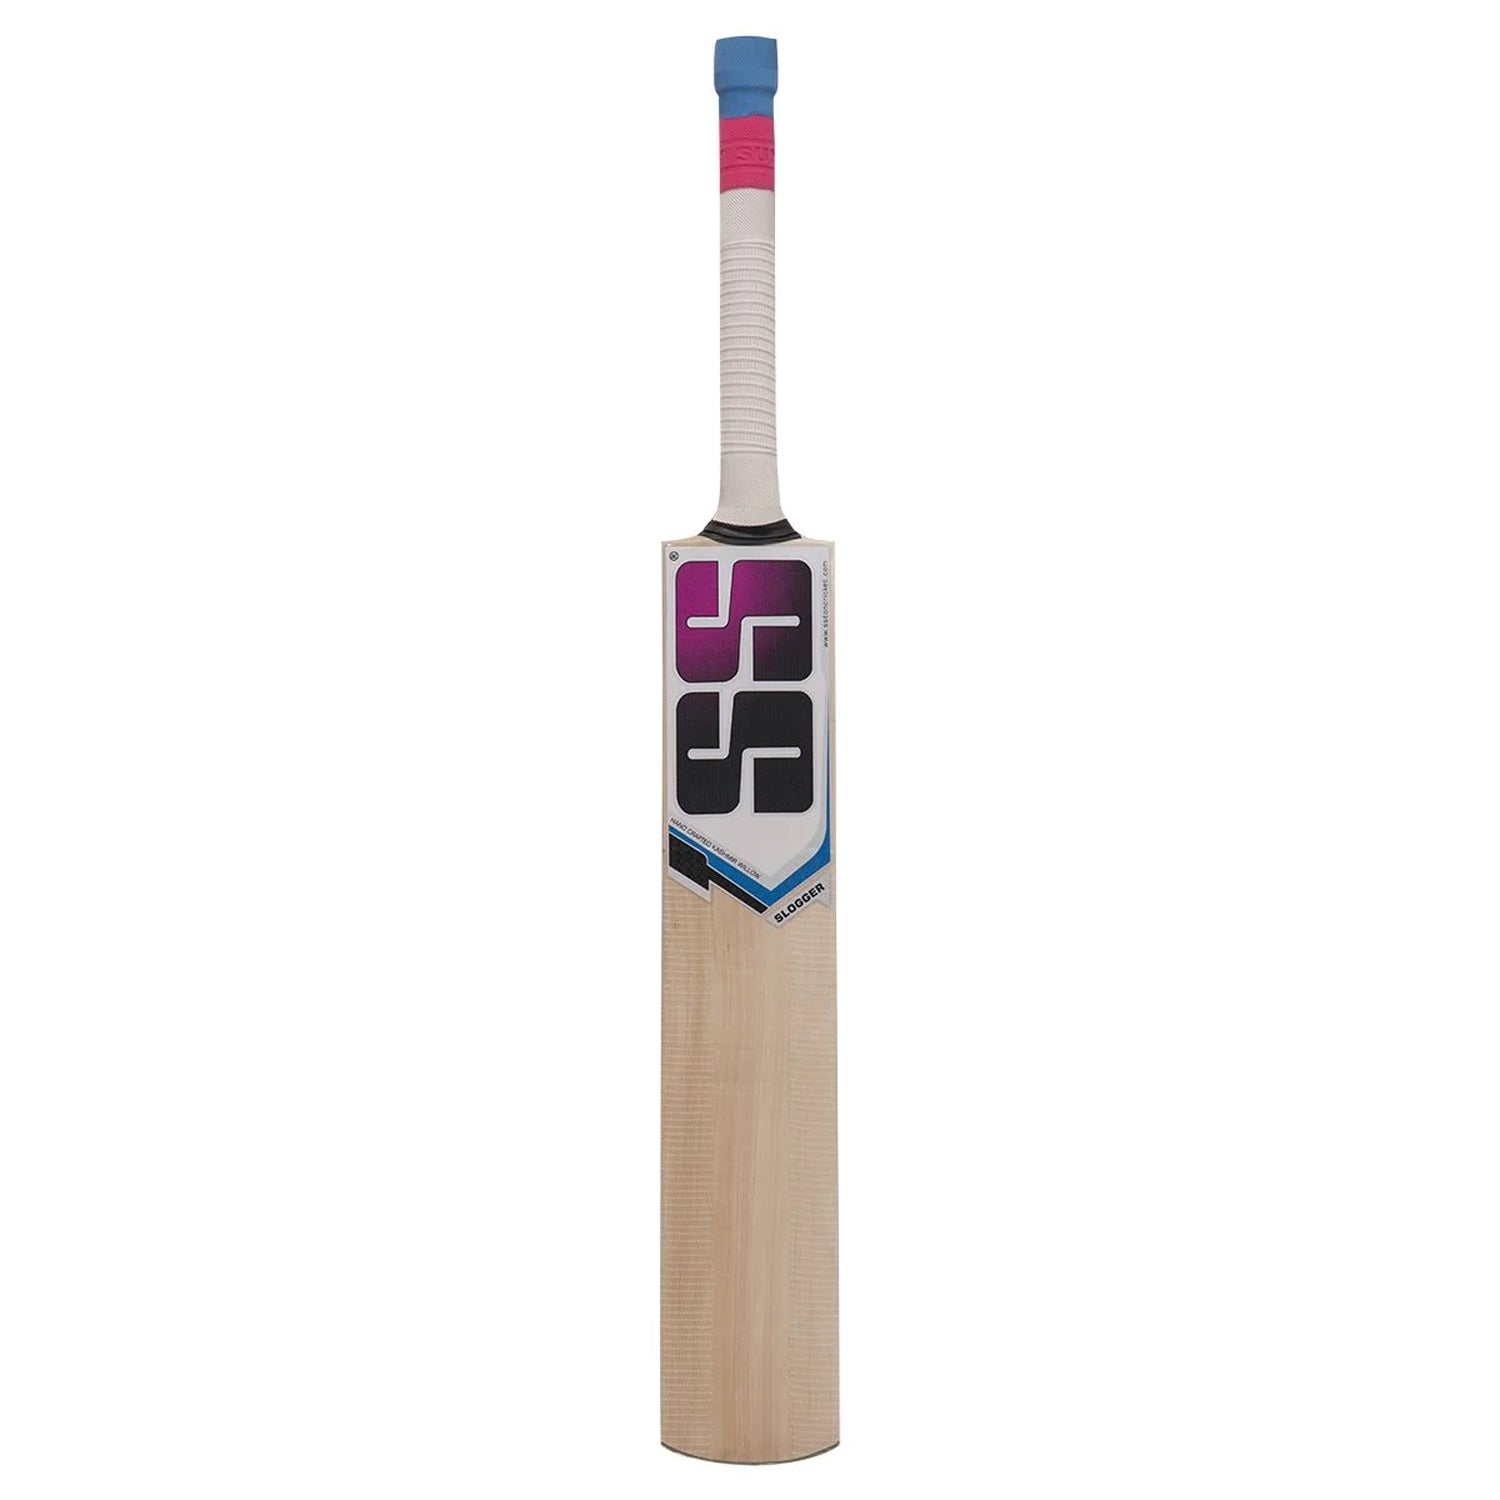 SS Slogger Kashmir Willow Cricket Bat - Best Price online Prokicksports.com